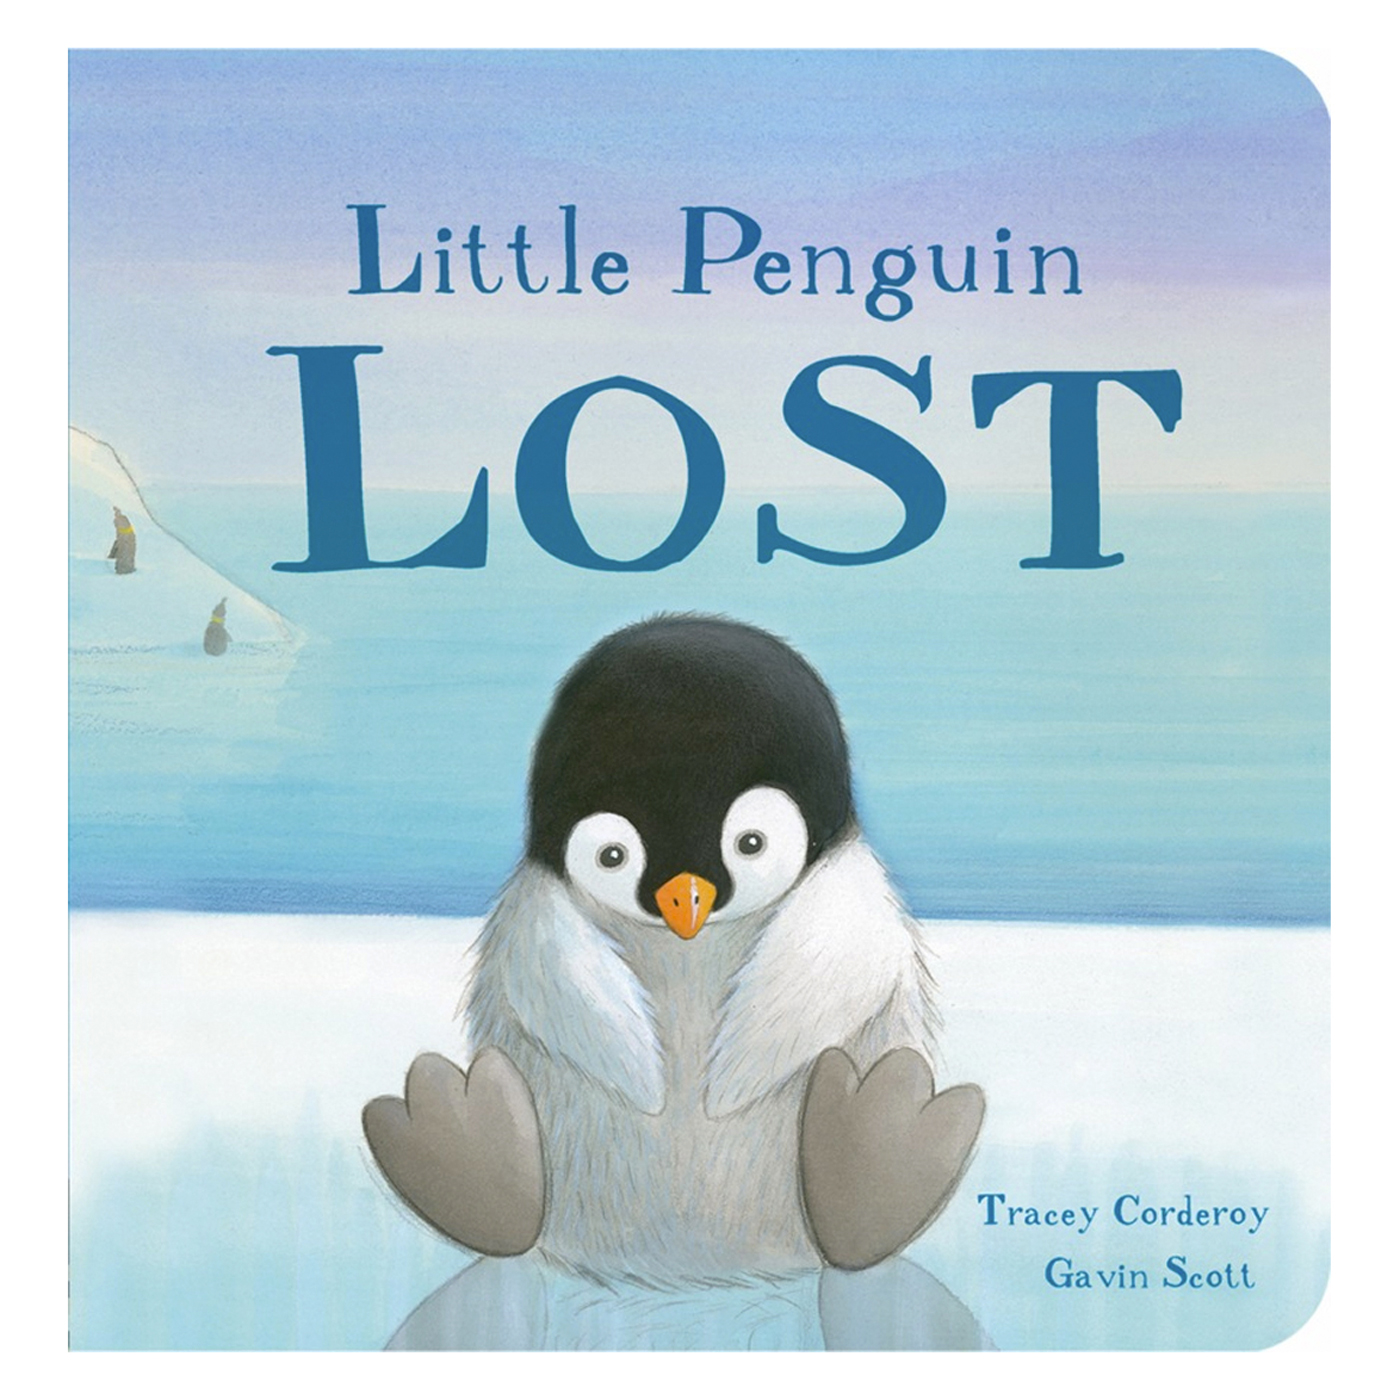  Little Penguin Lost